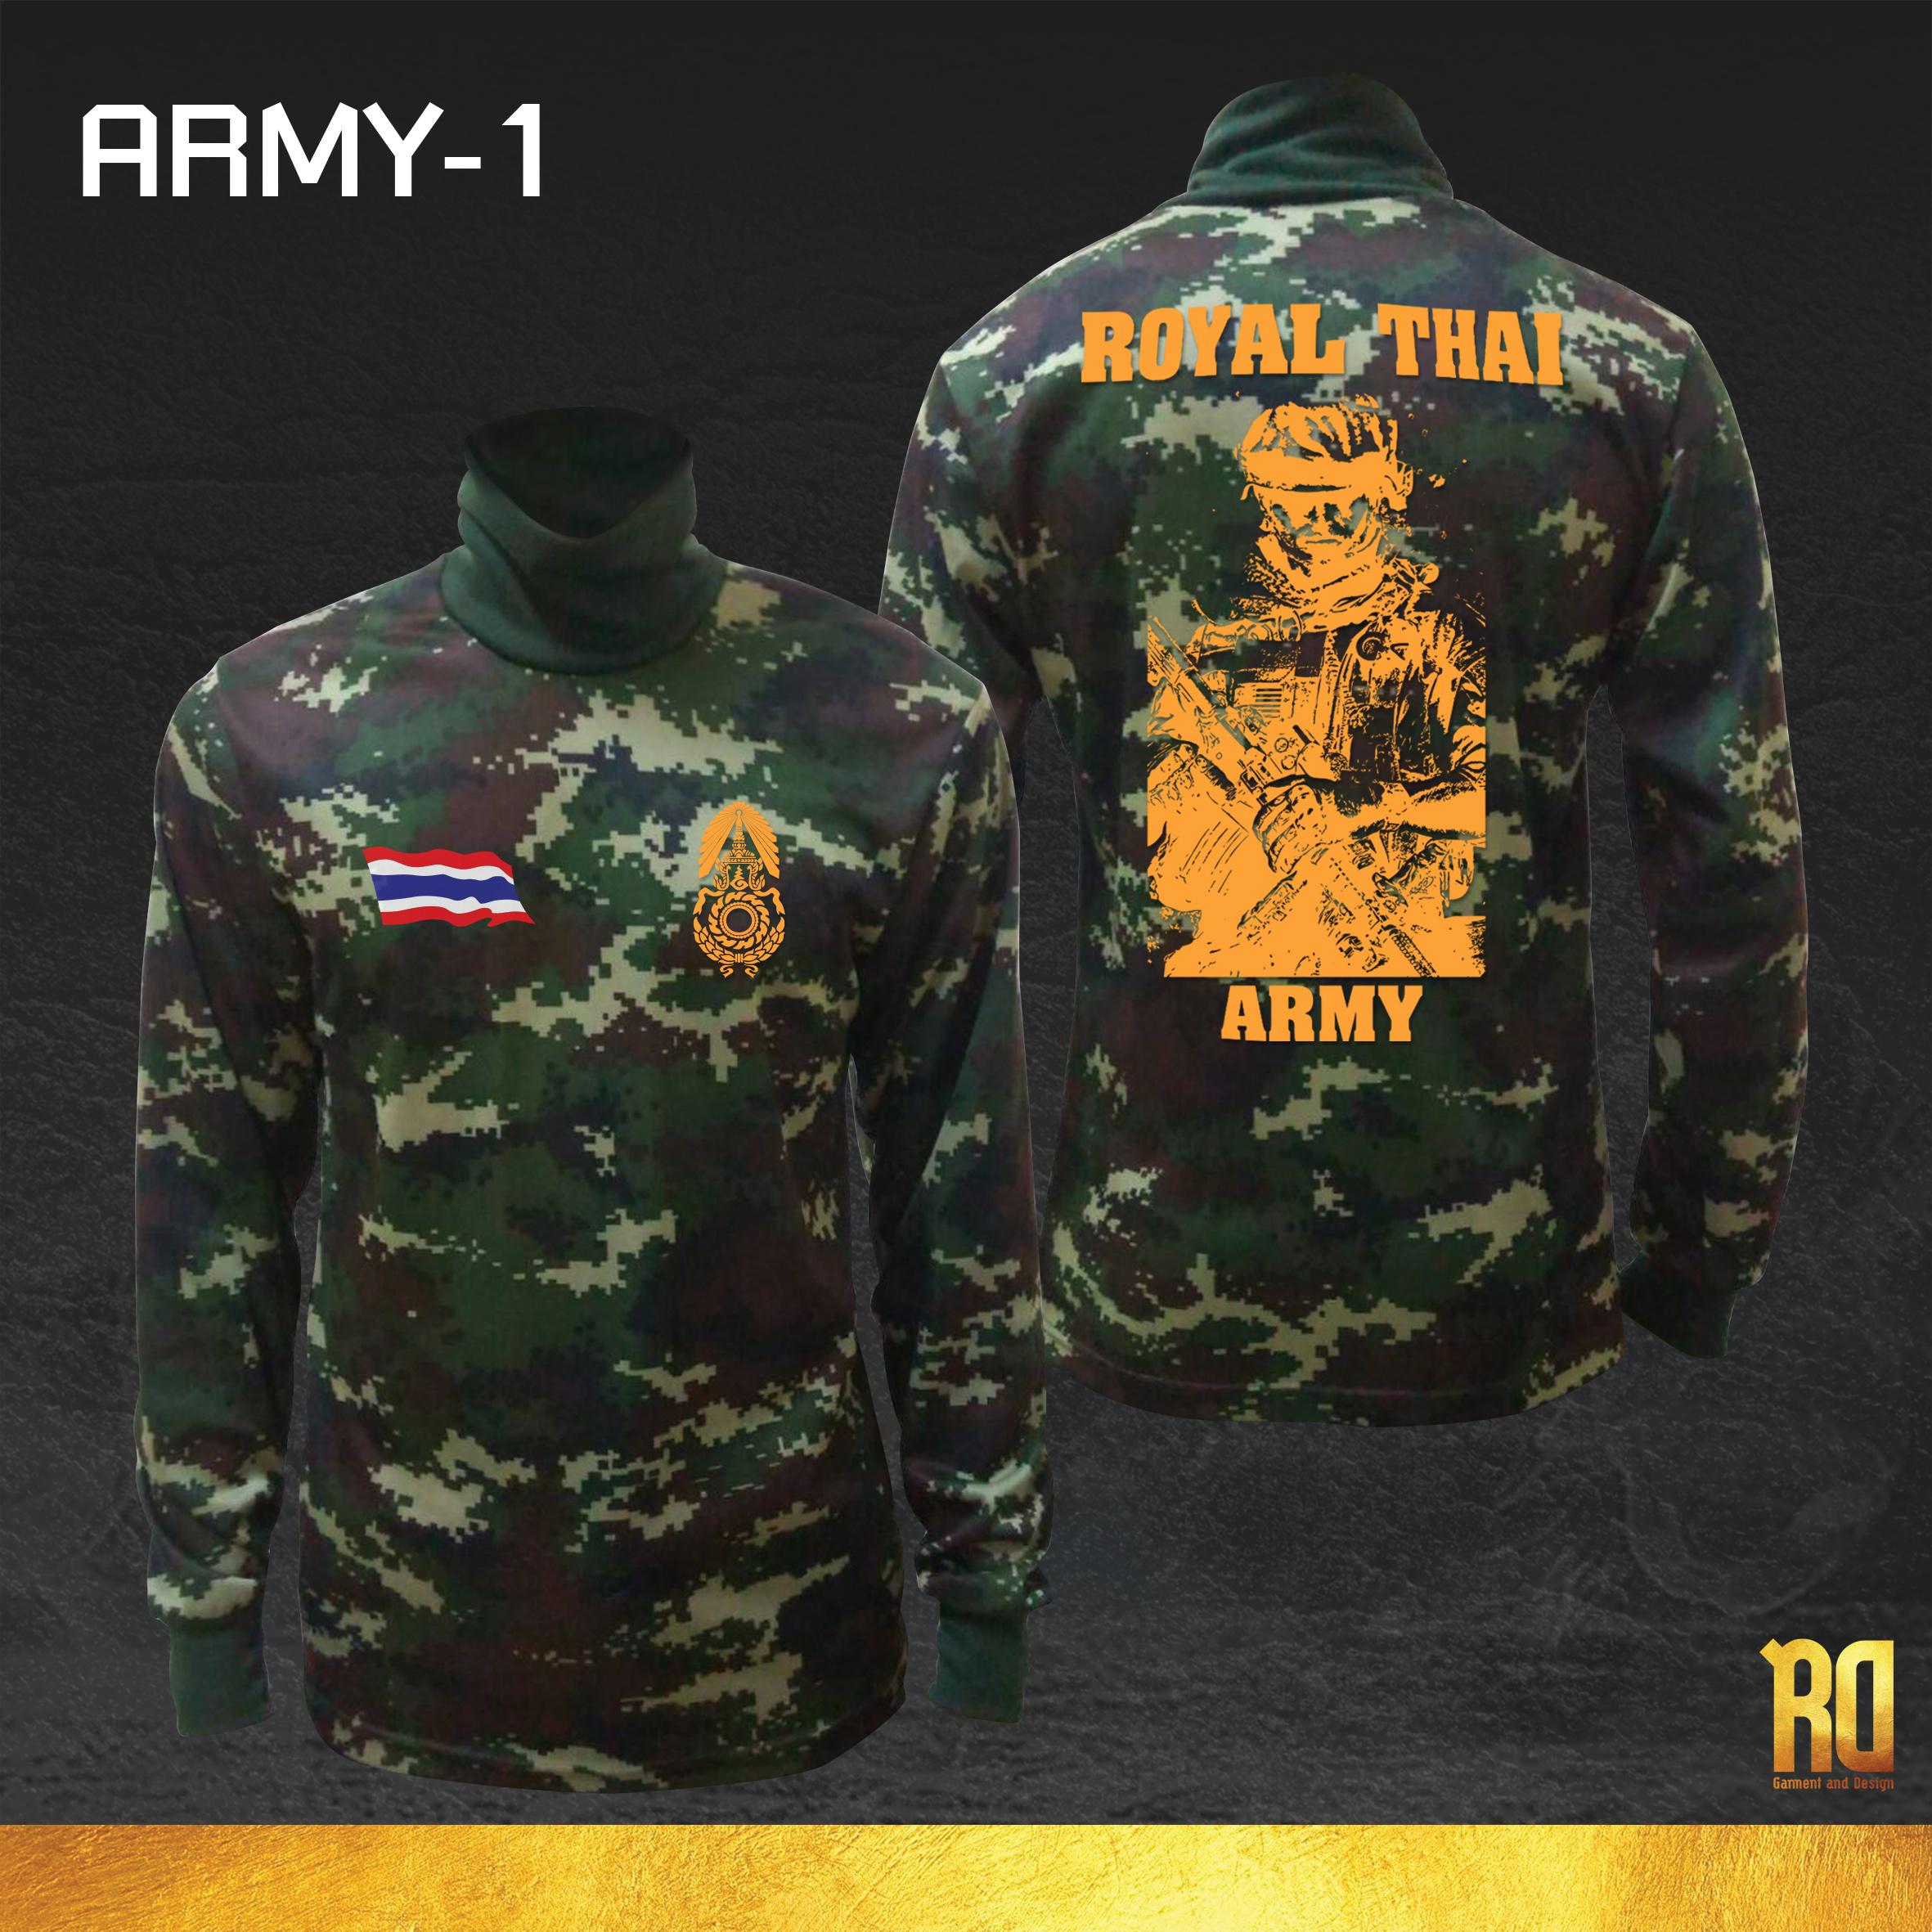 ARMY-1 เสื้อซับในทหารบก เเขนยาวคอเต่า